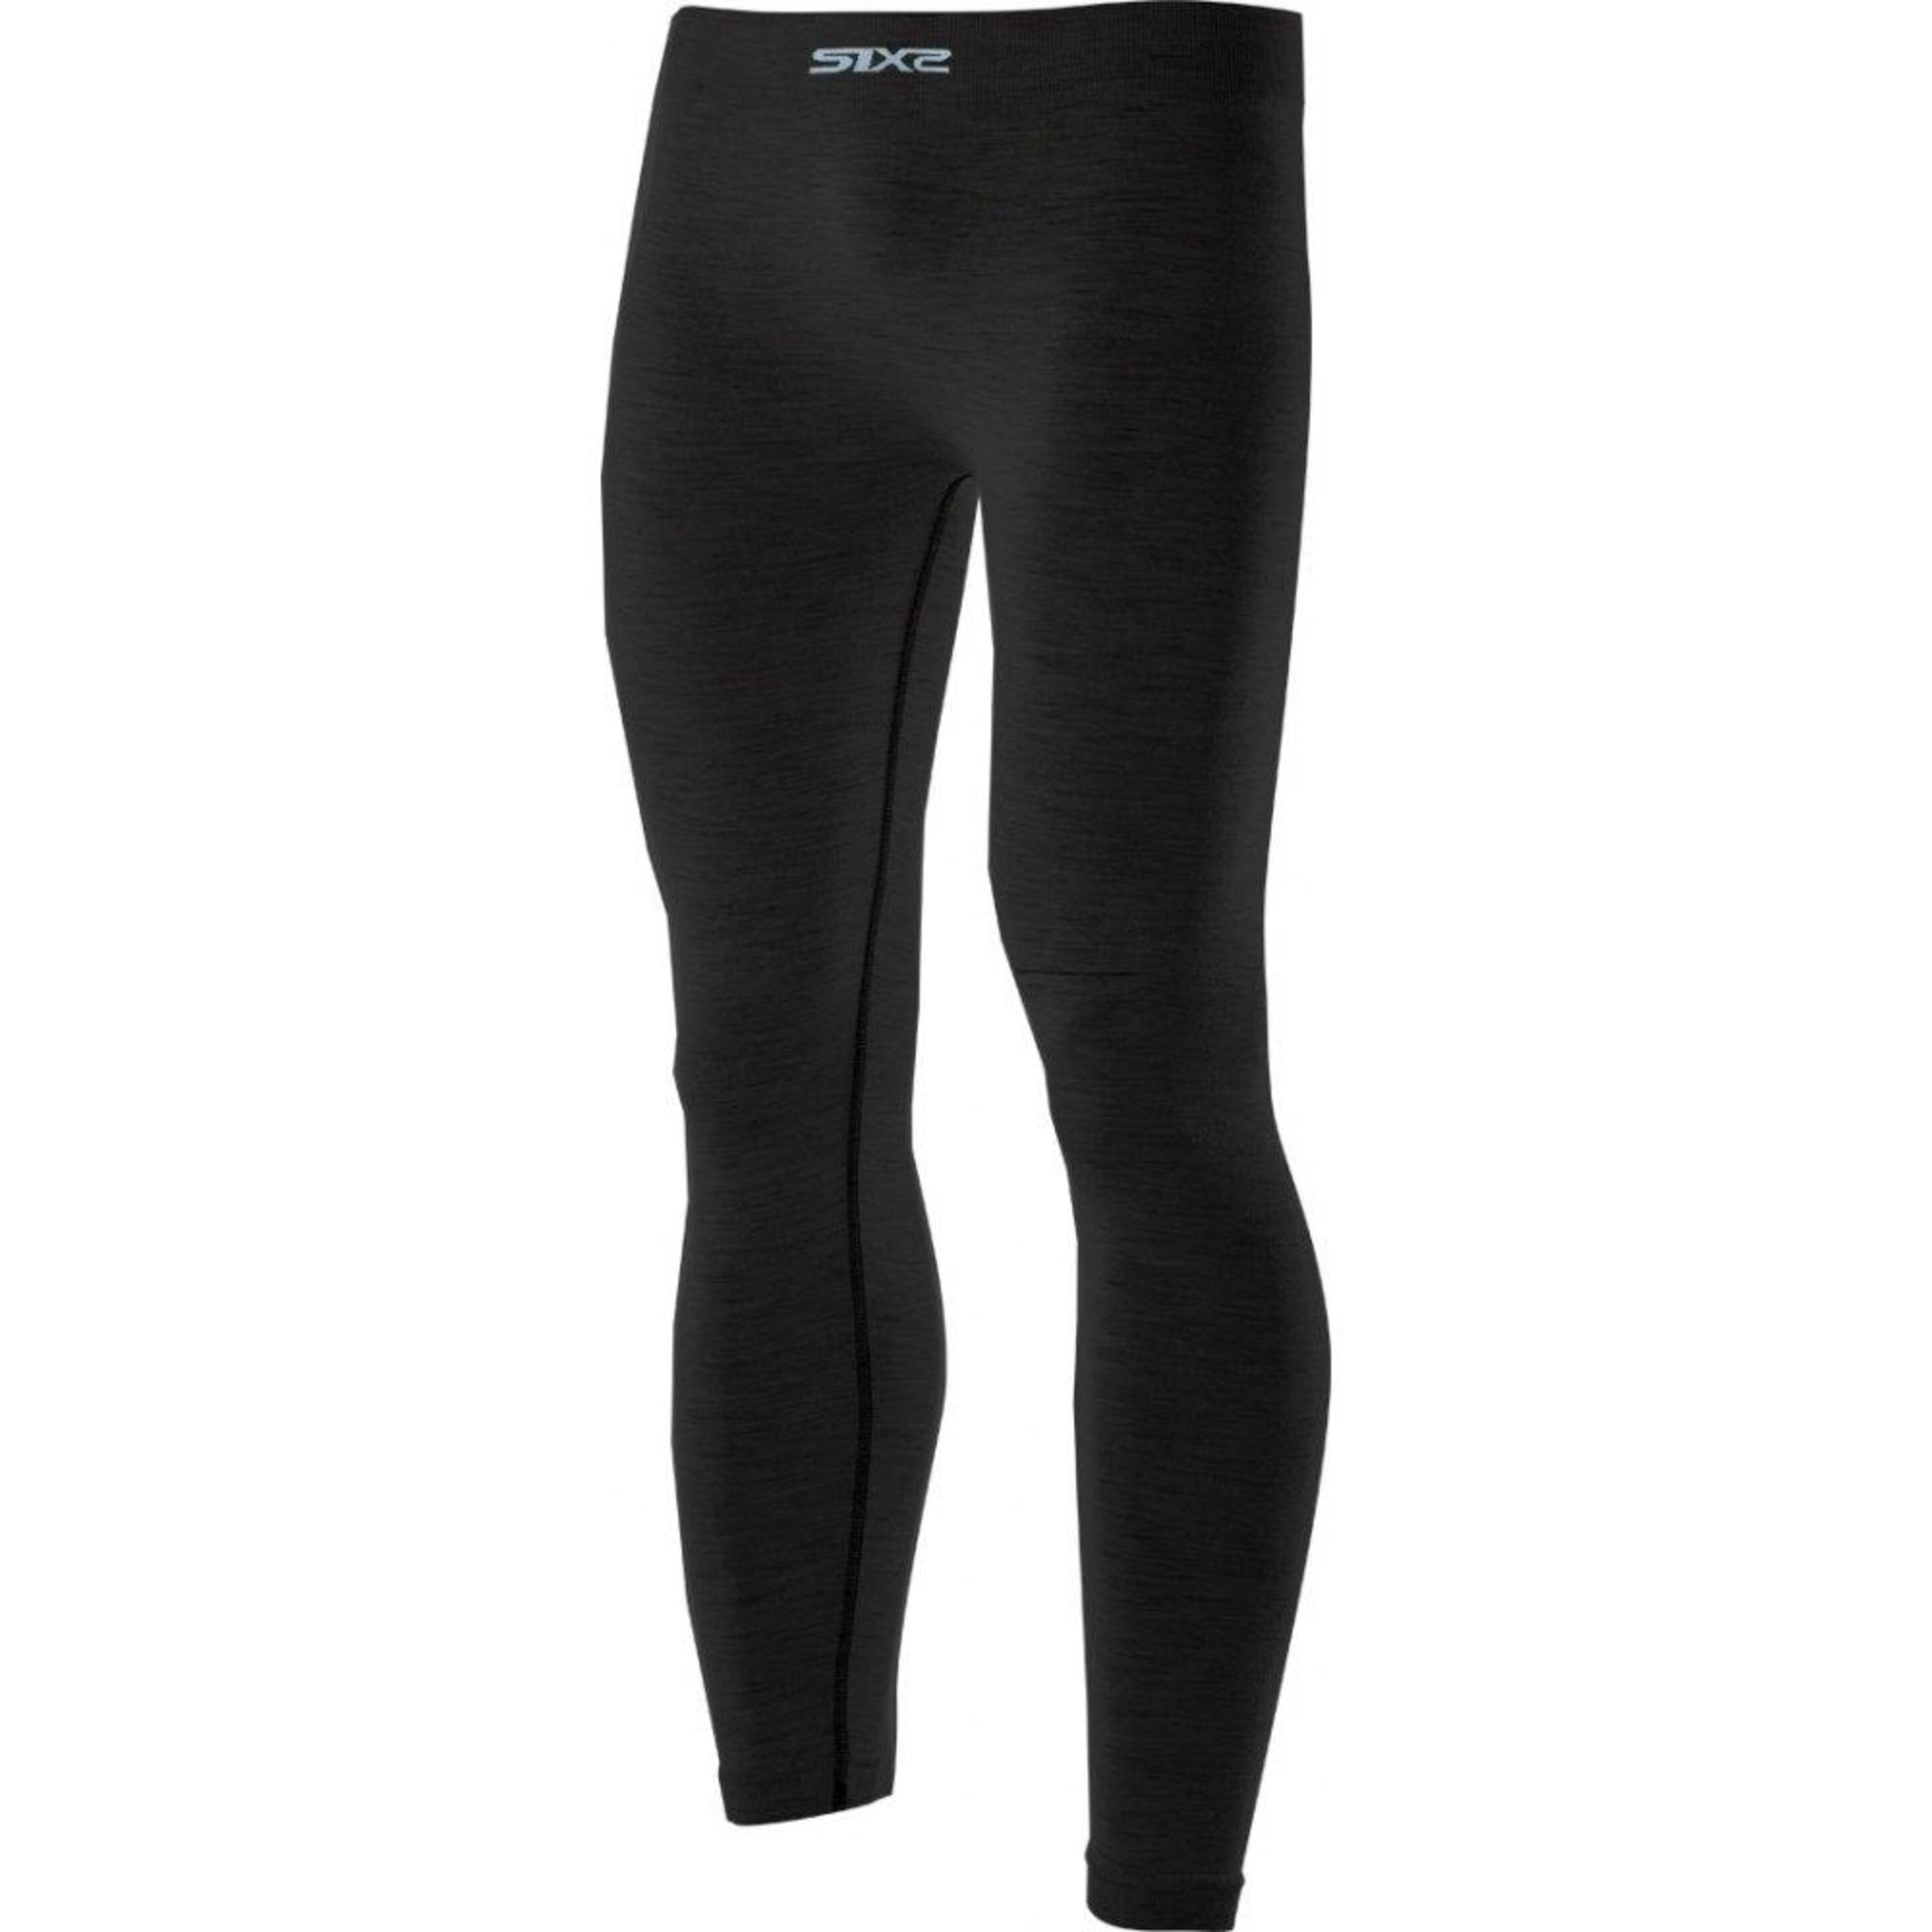 Mallas Ciclismo Carbon Underwear Sixs Pnxl Bt - negro - 